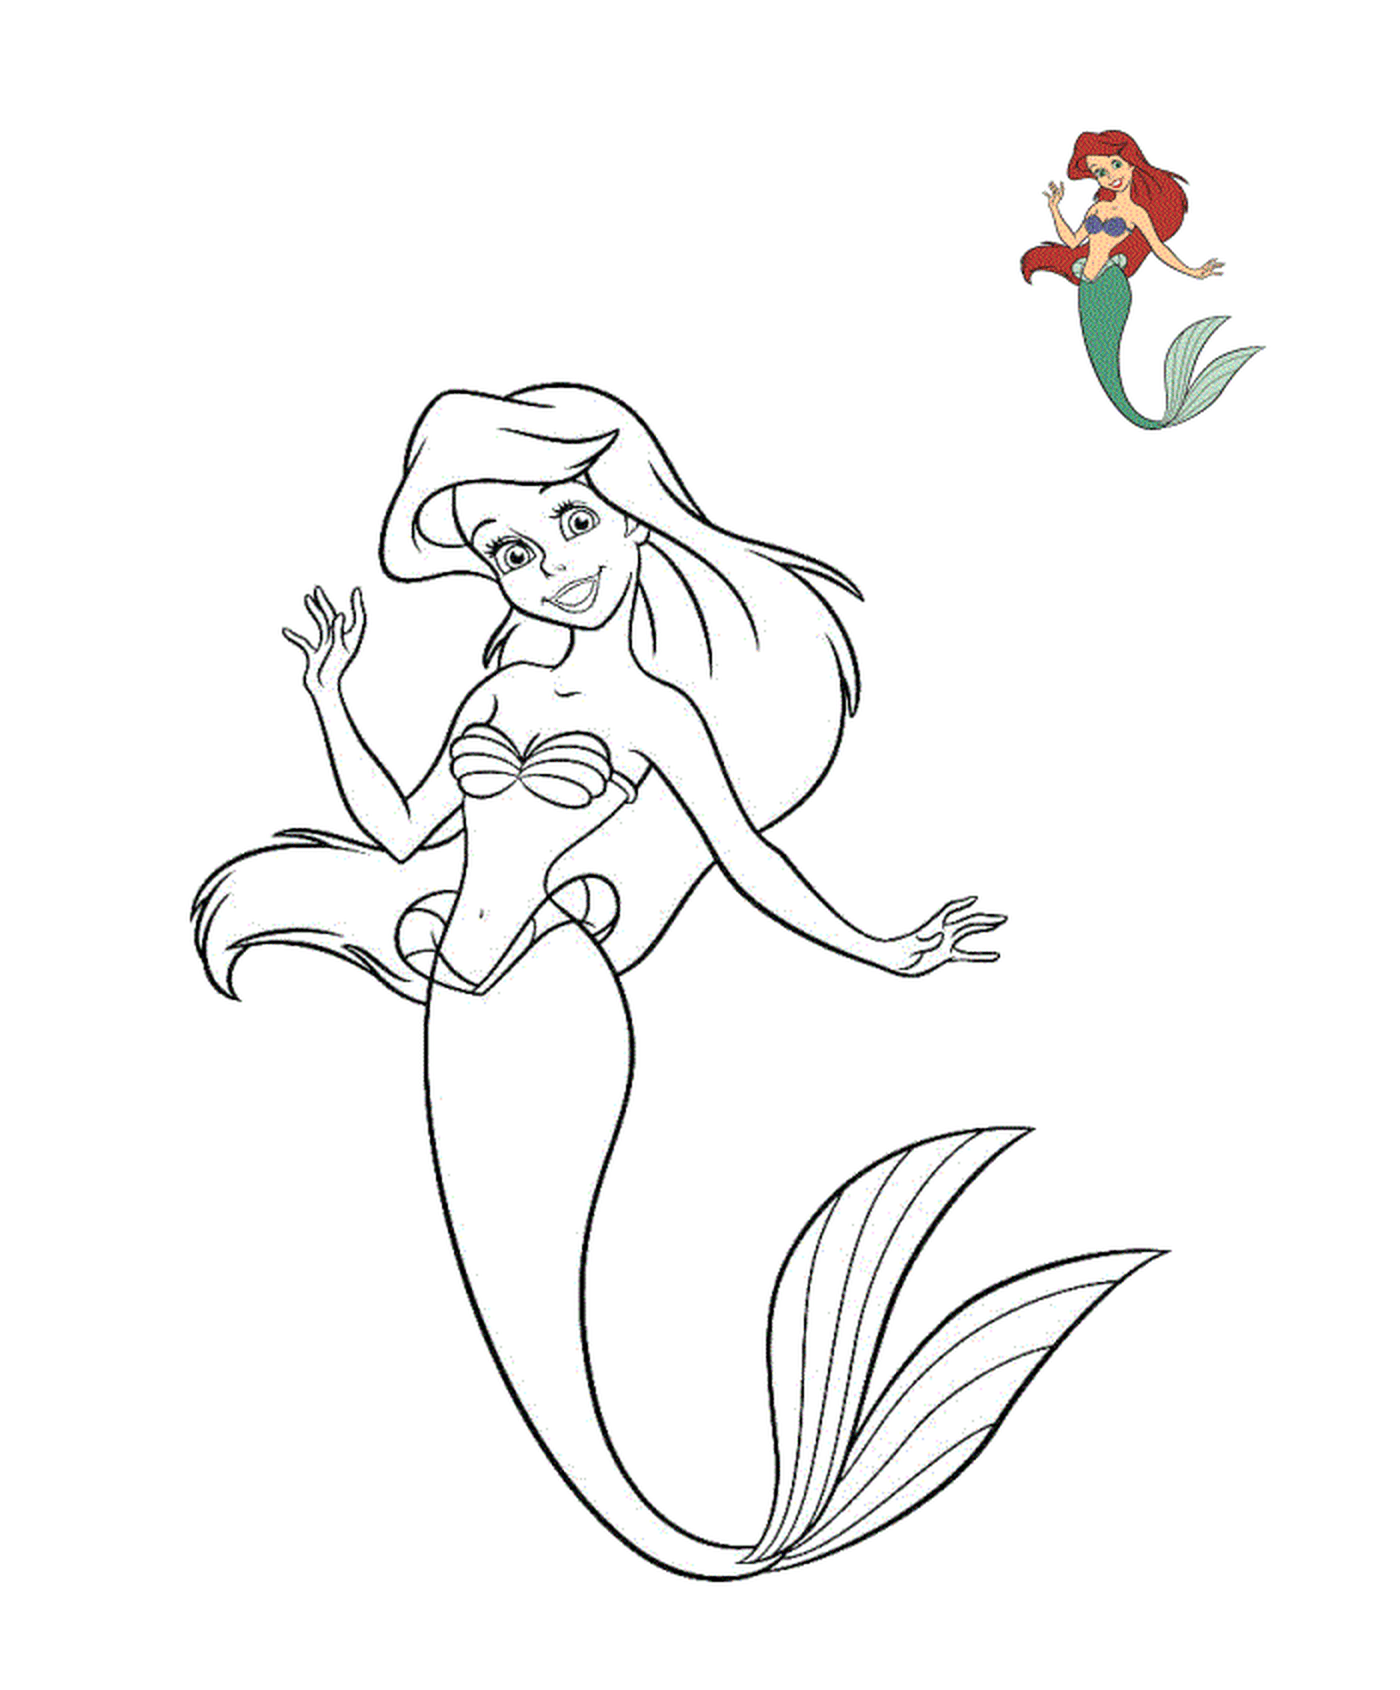  Ariel, a pequena sereia da Disney, princesa 